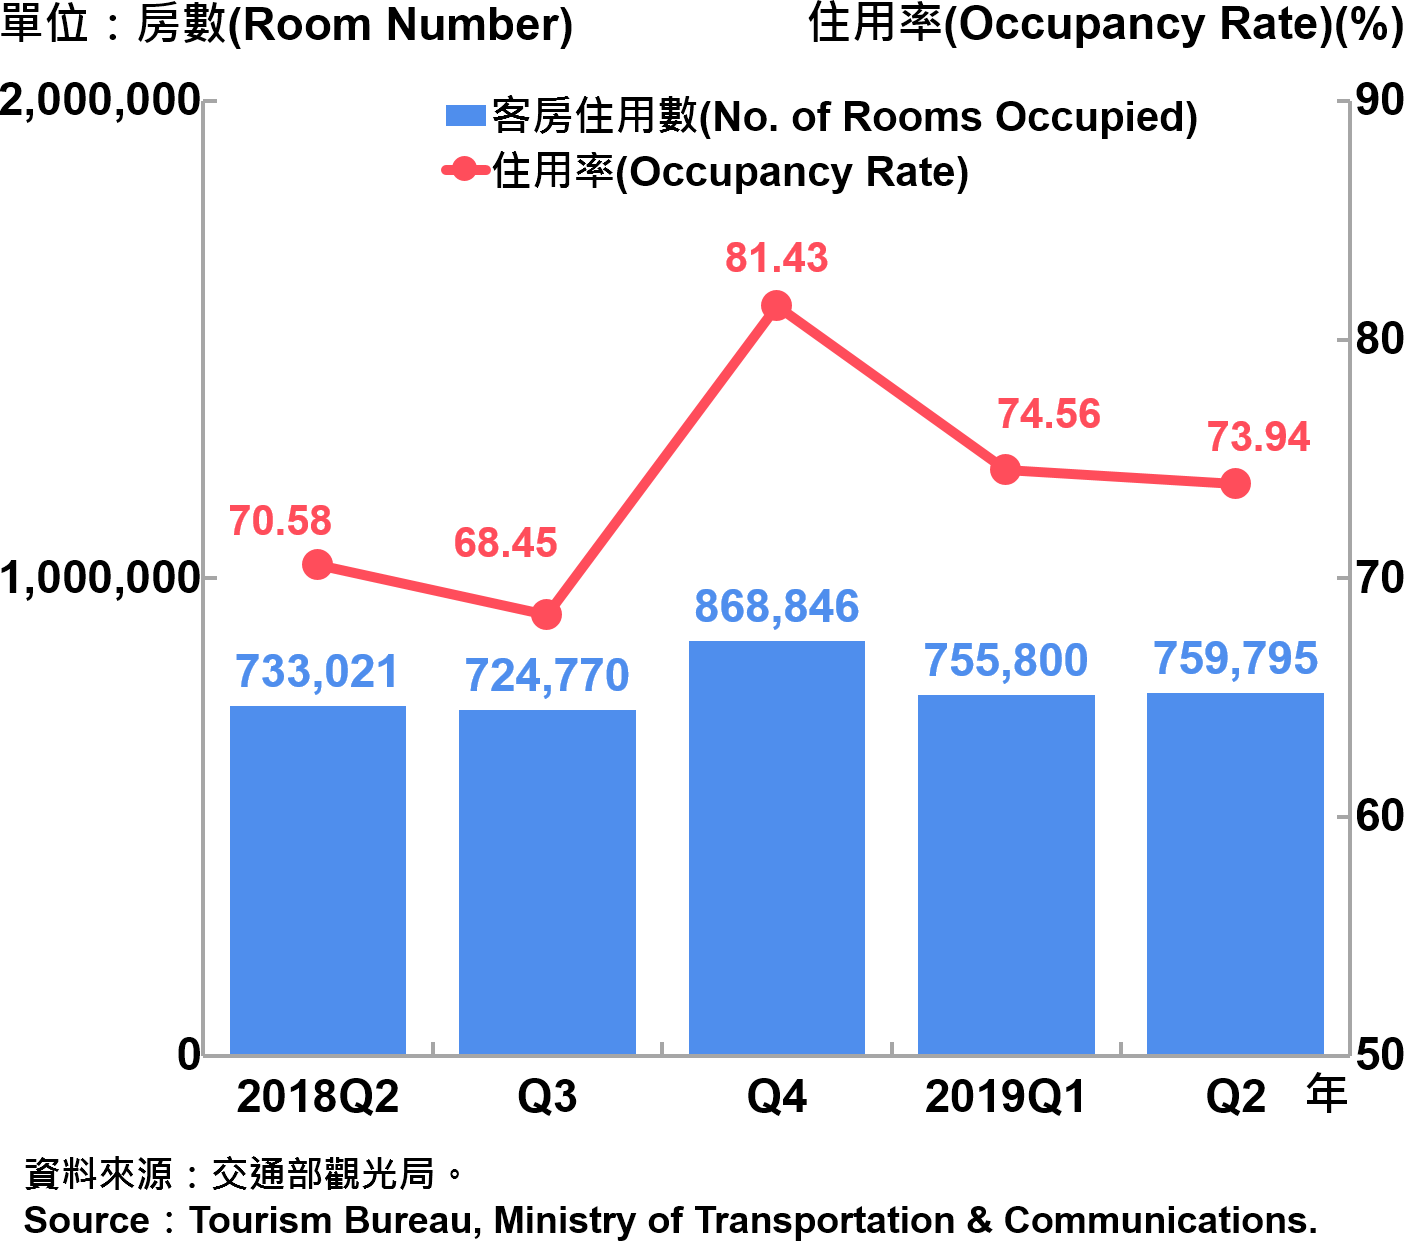 臺北市觀光旅館客房住用率統計—2019Q2 Room Occupancy Rate of Tourist Hotel in Taipei City—2019Q2